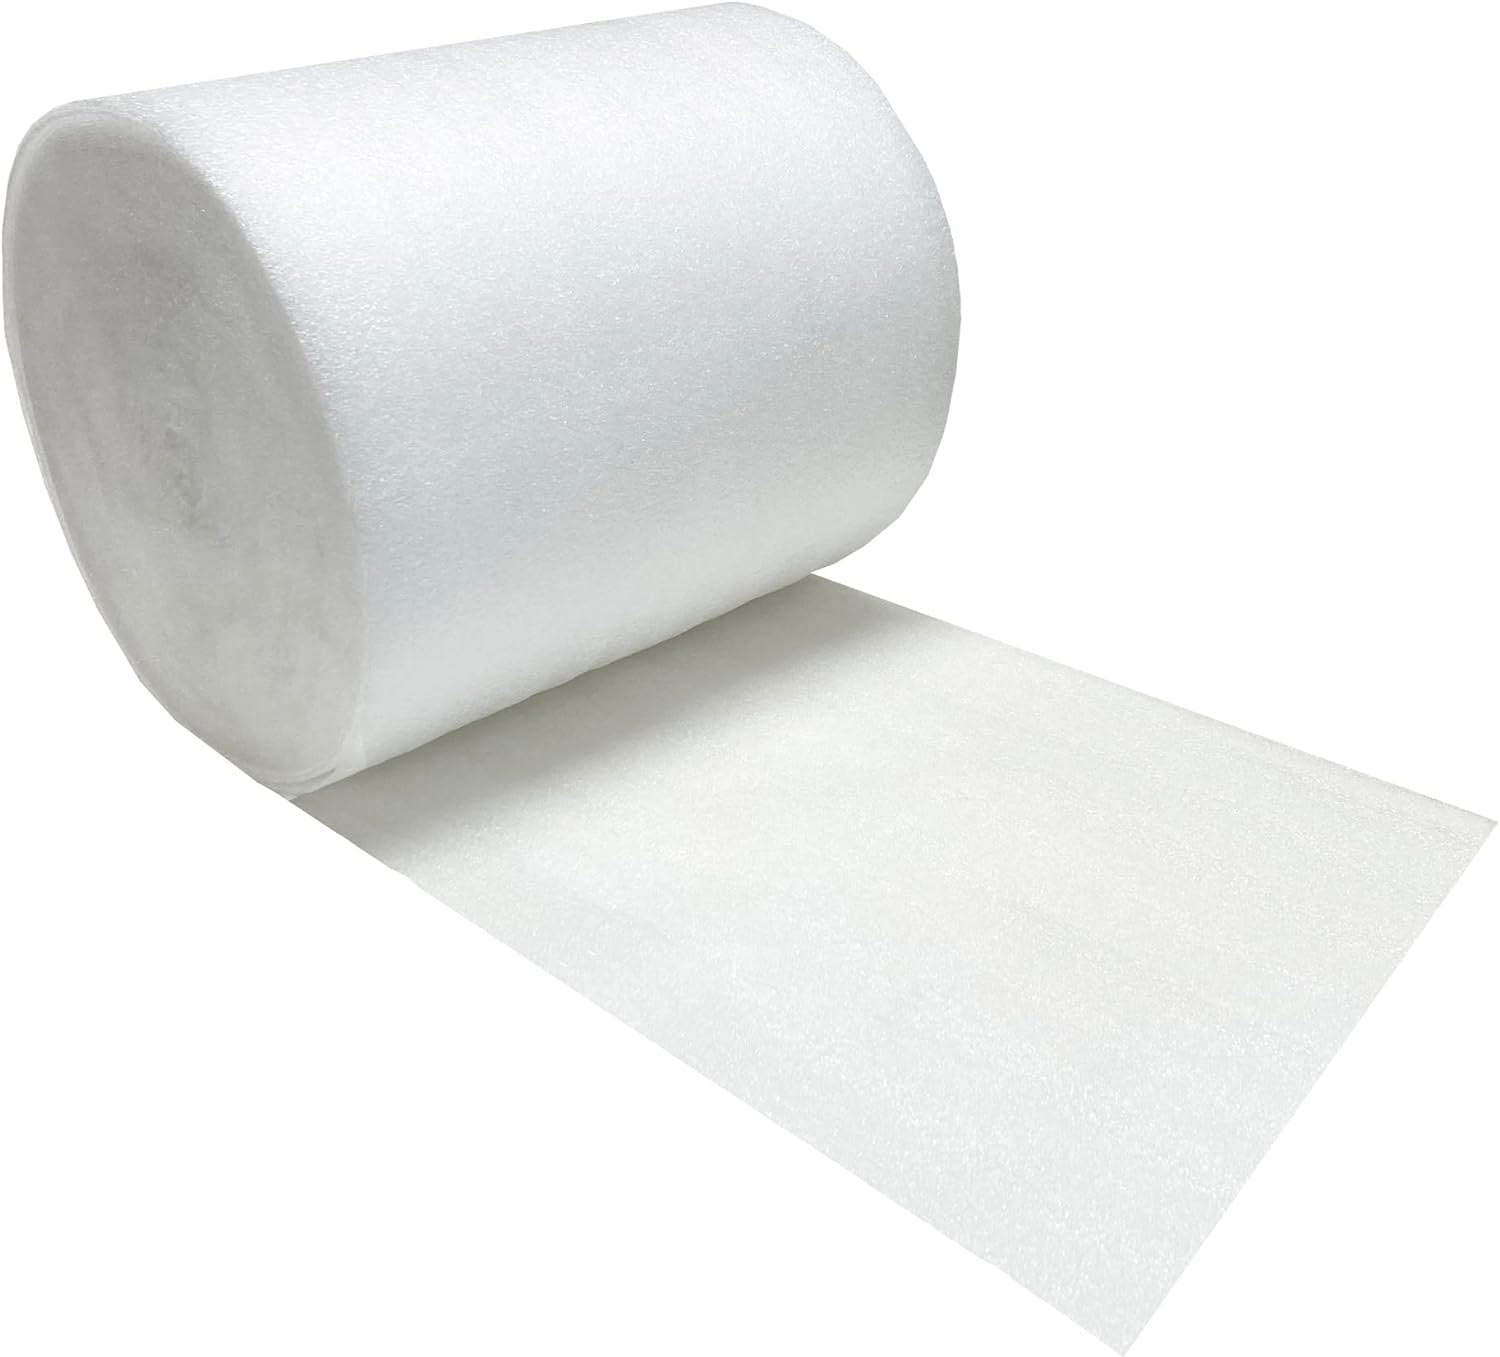 foam sheets as planter box liner